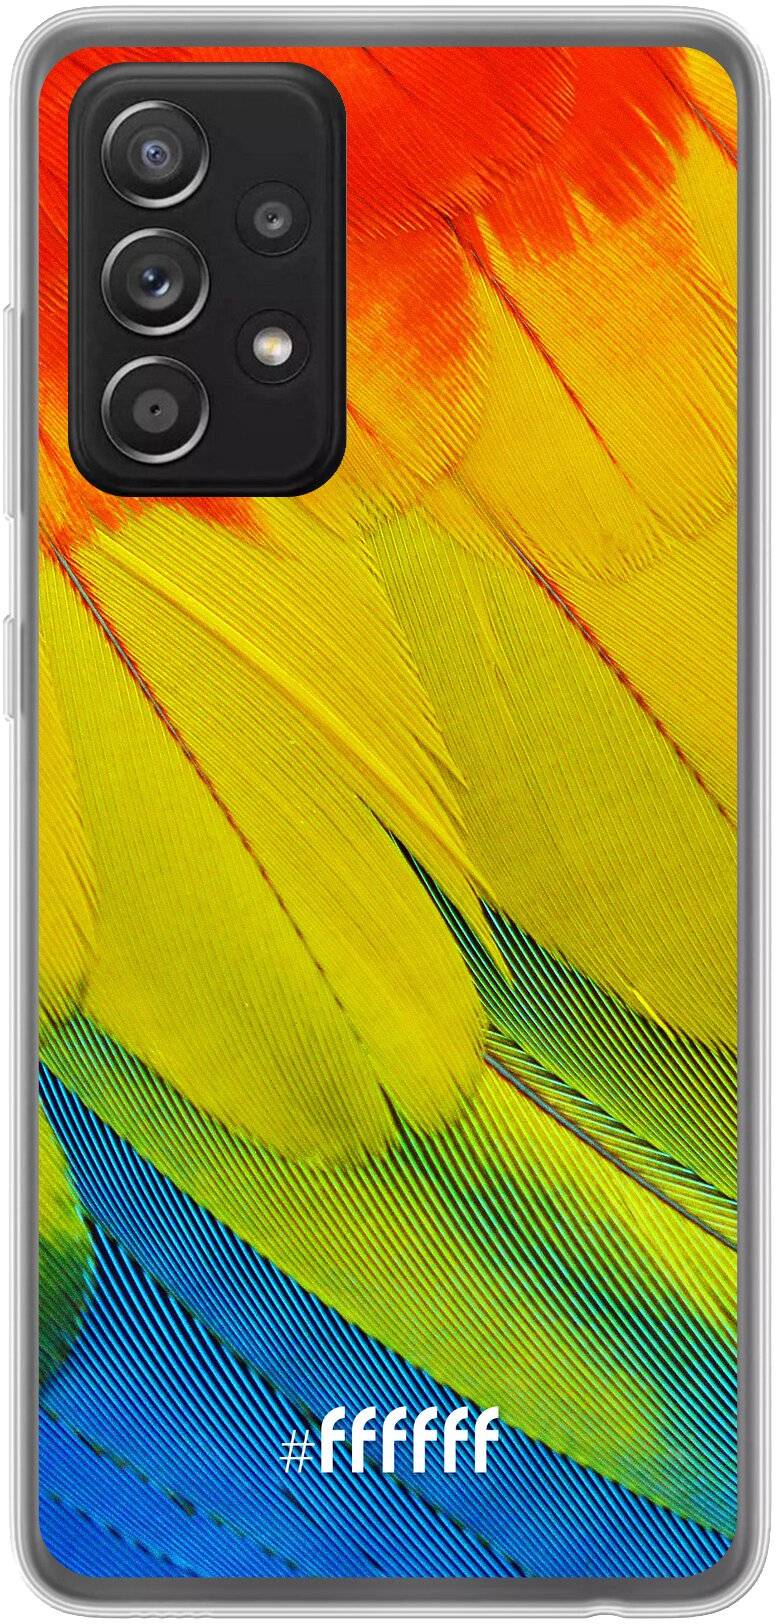 Macaw Hues Galaxy A52